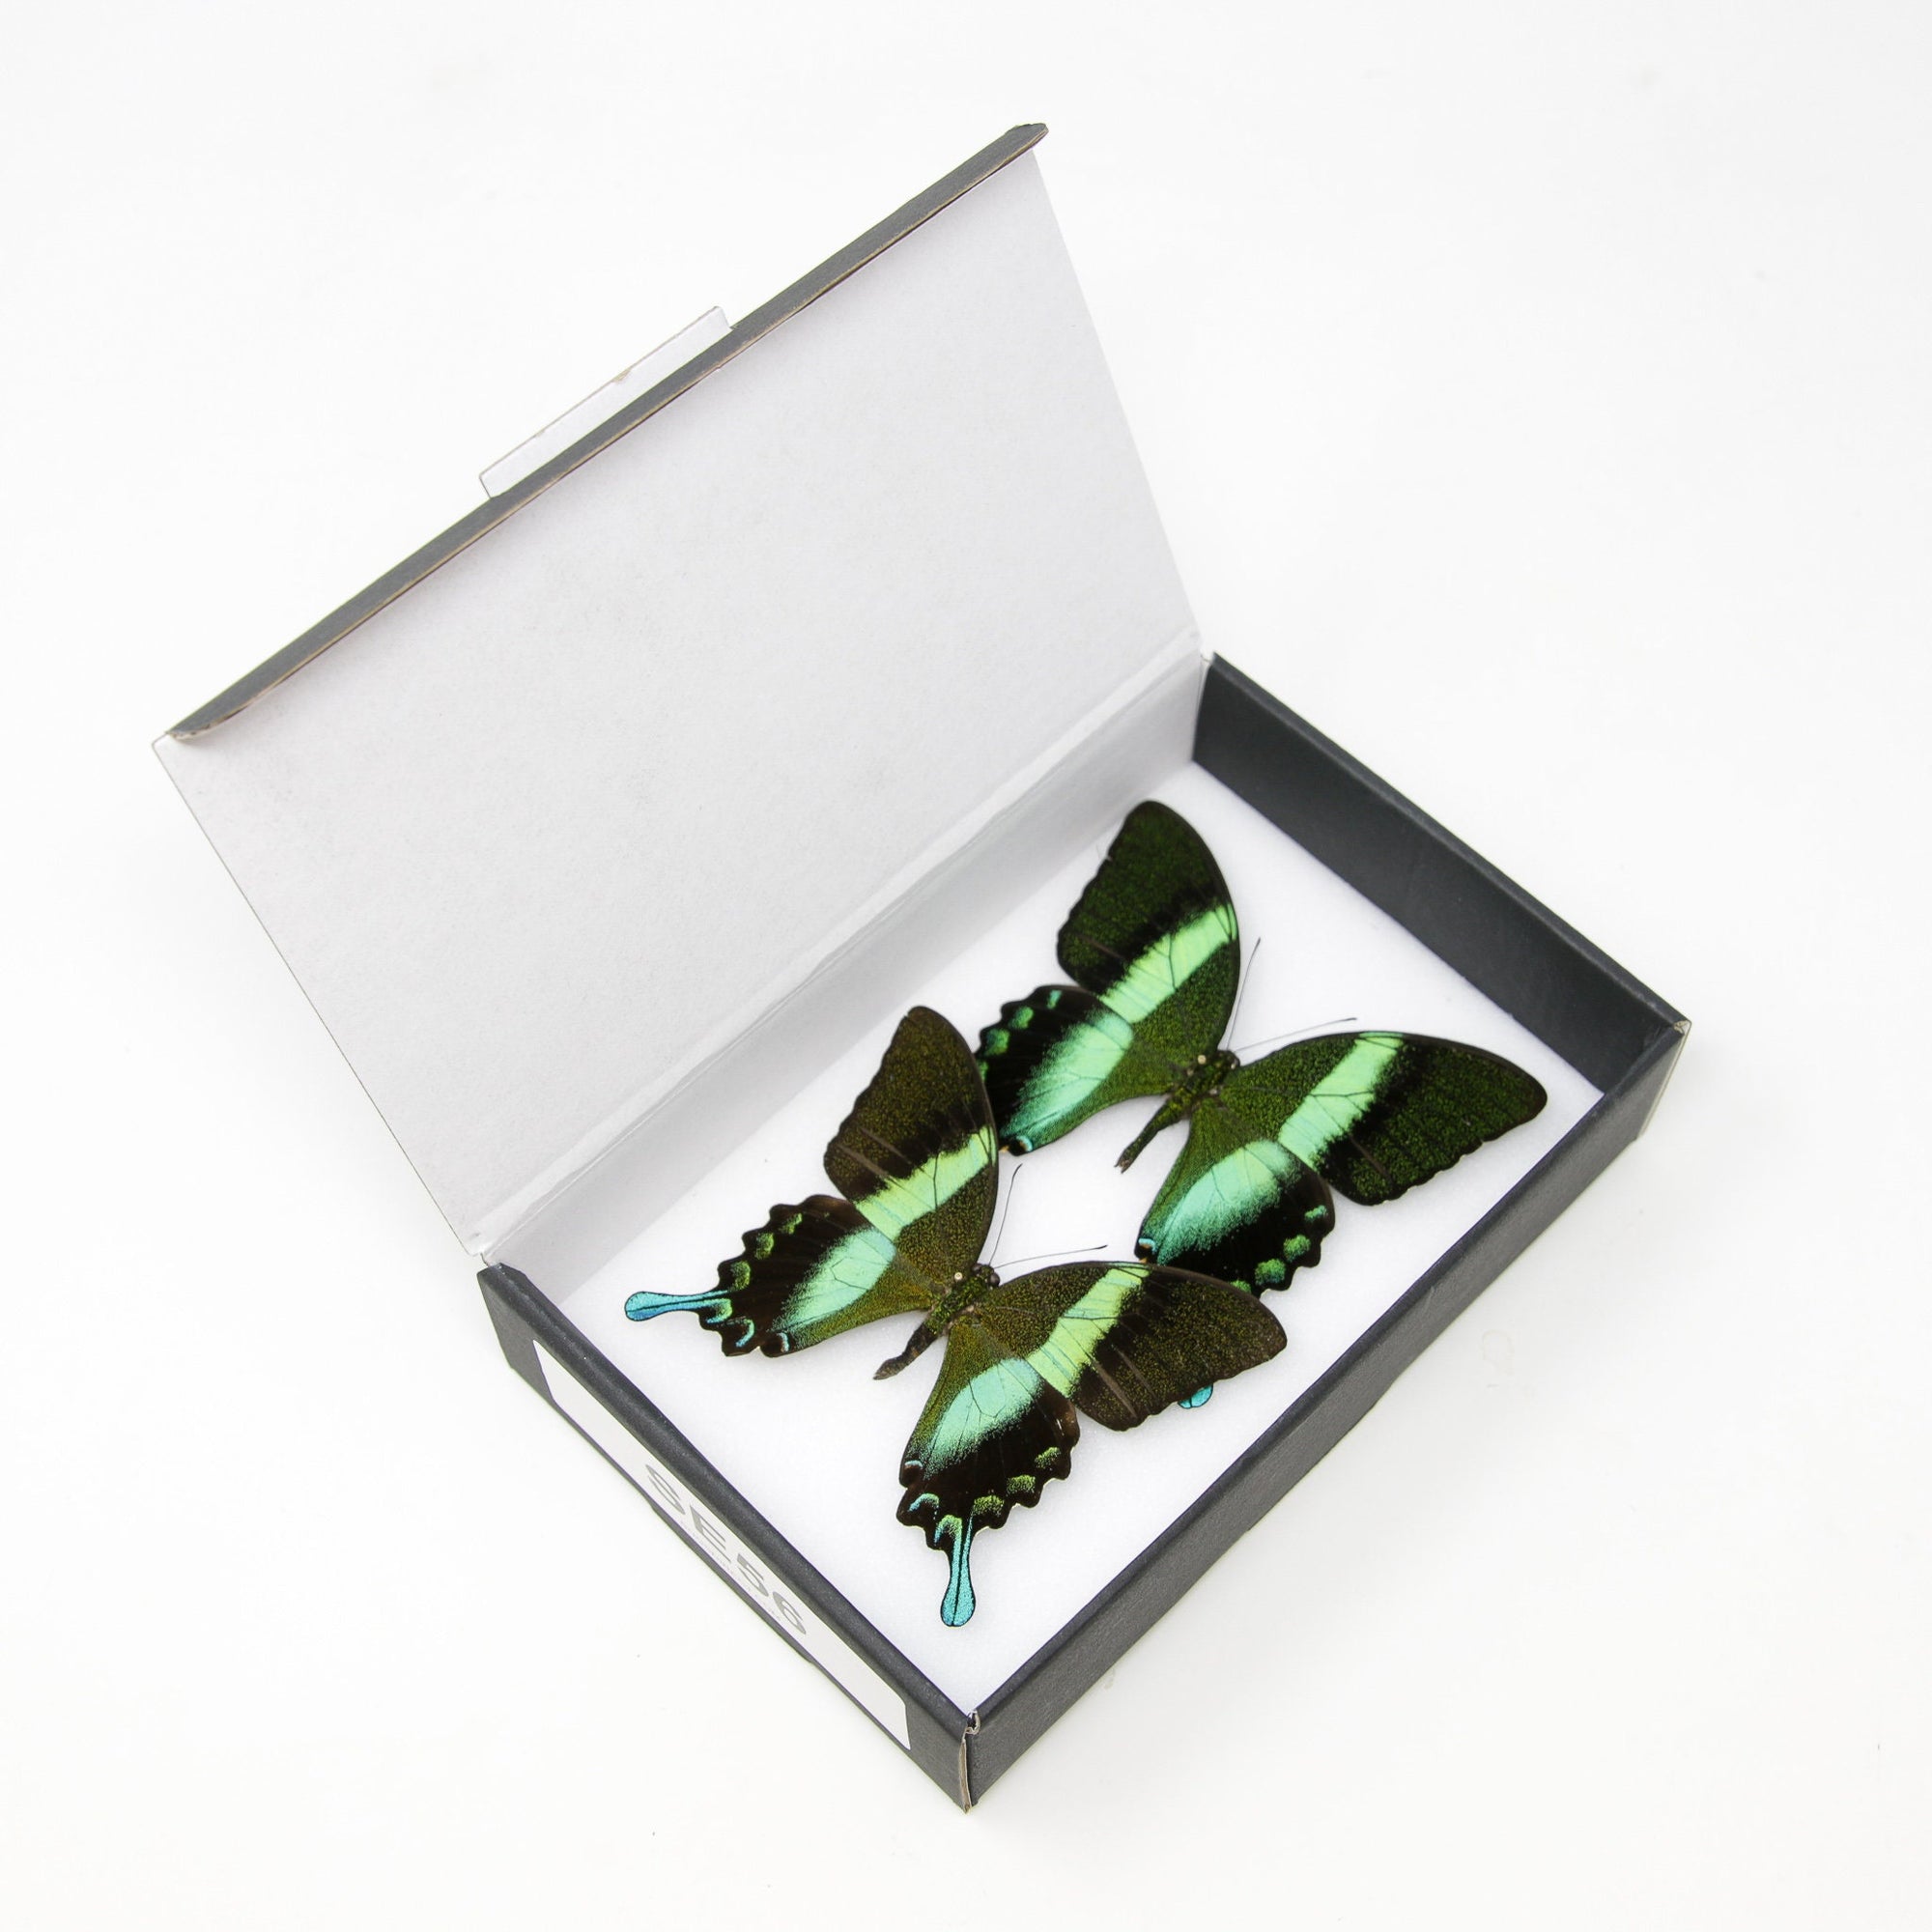 TWO (2) Real Green Swallowtail Butterflies (Papilio blumei) A1 Quality SET SPECIMENS, Lepidoptera Entomology Box #SE56